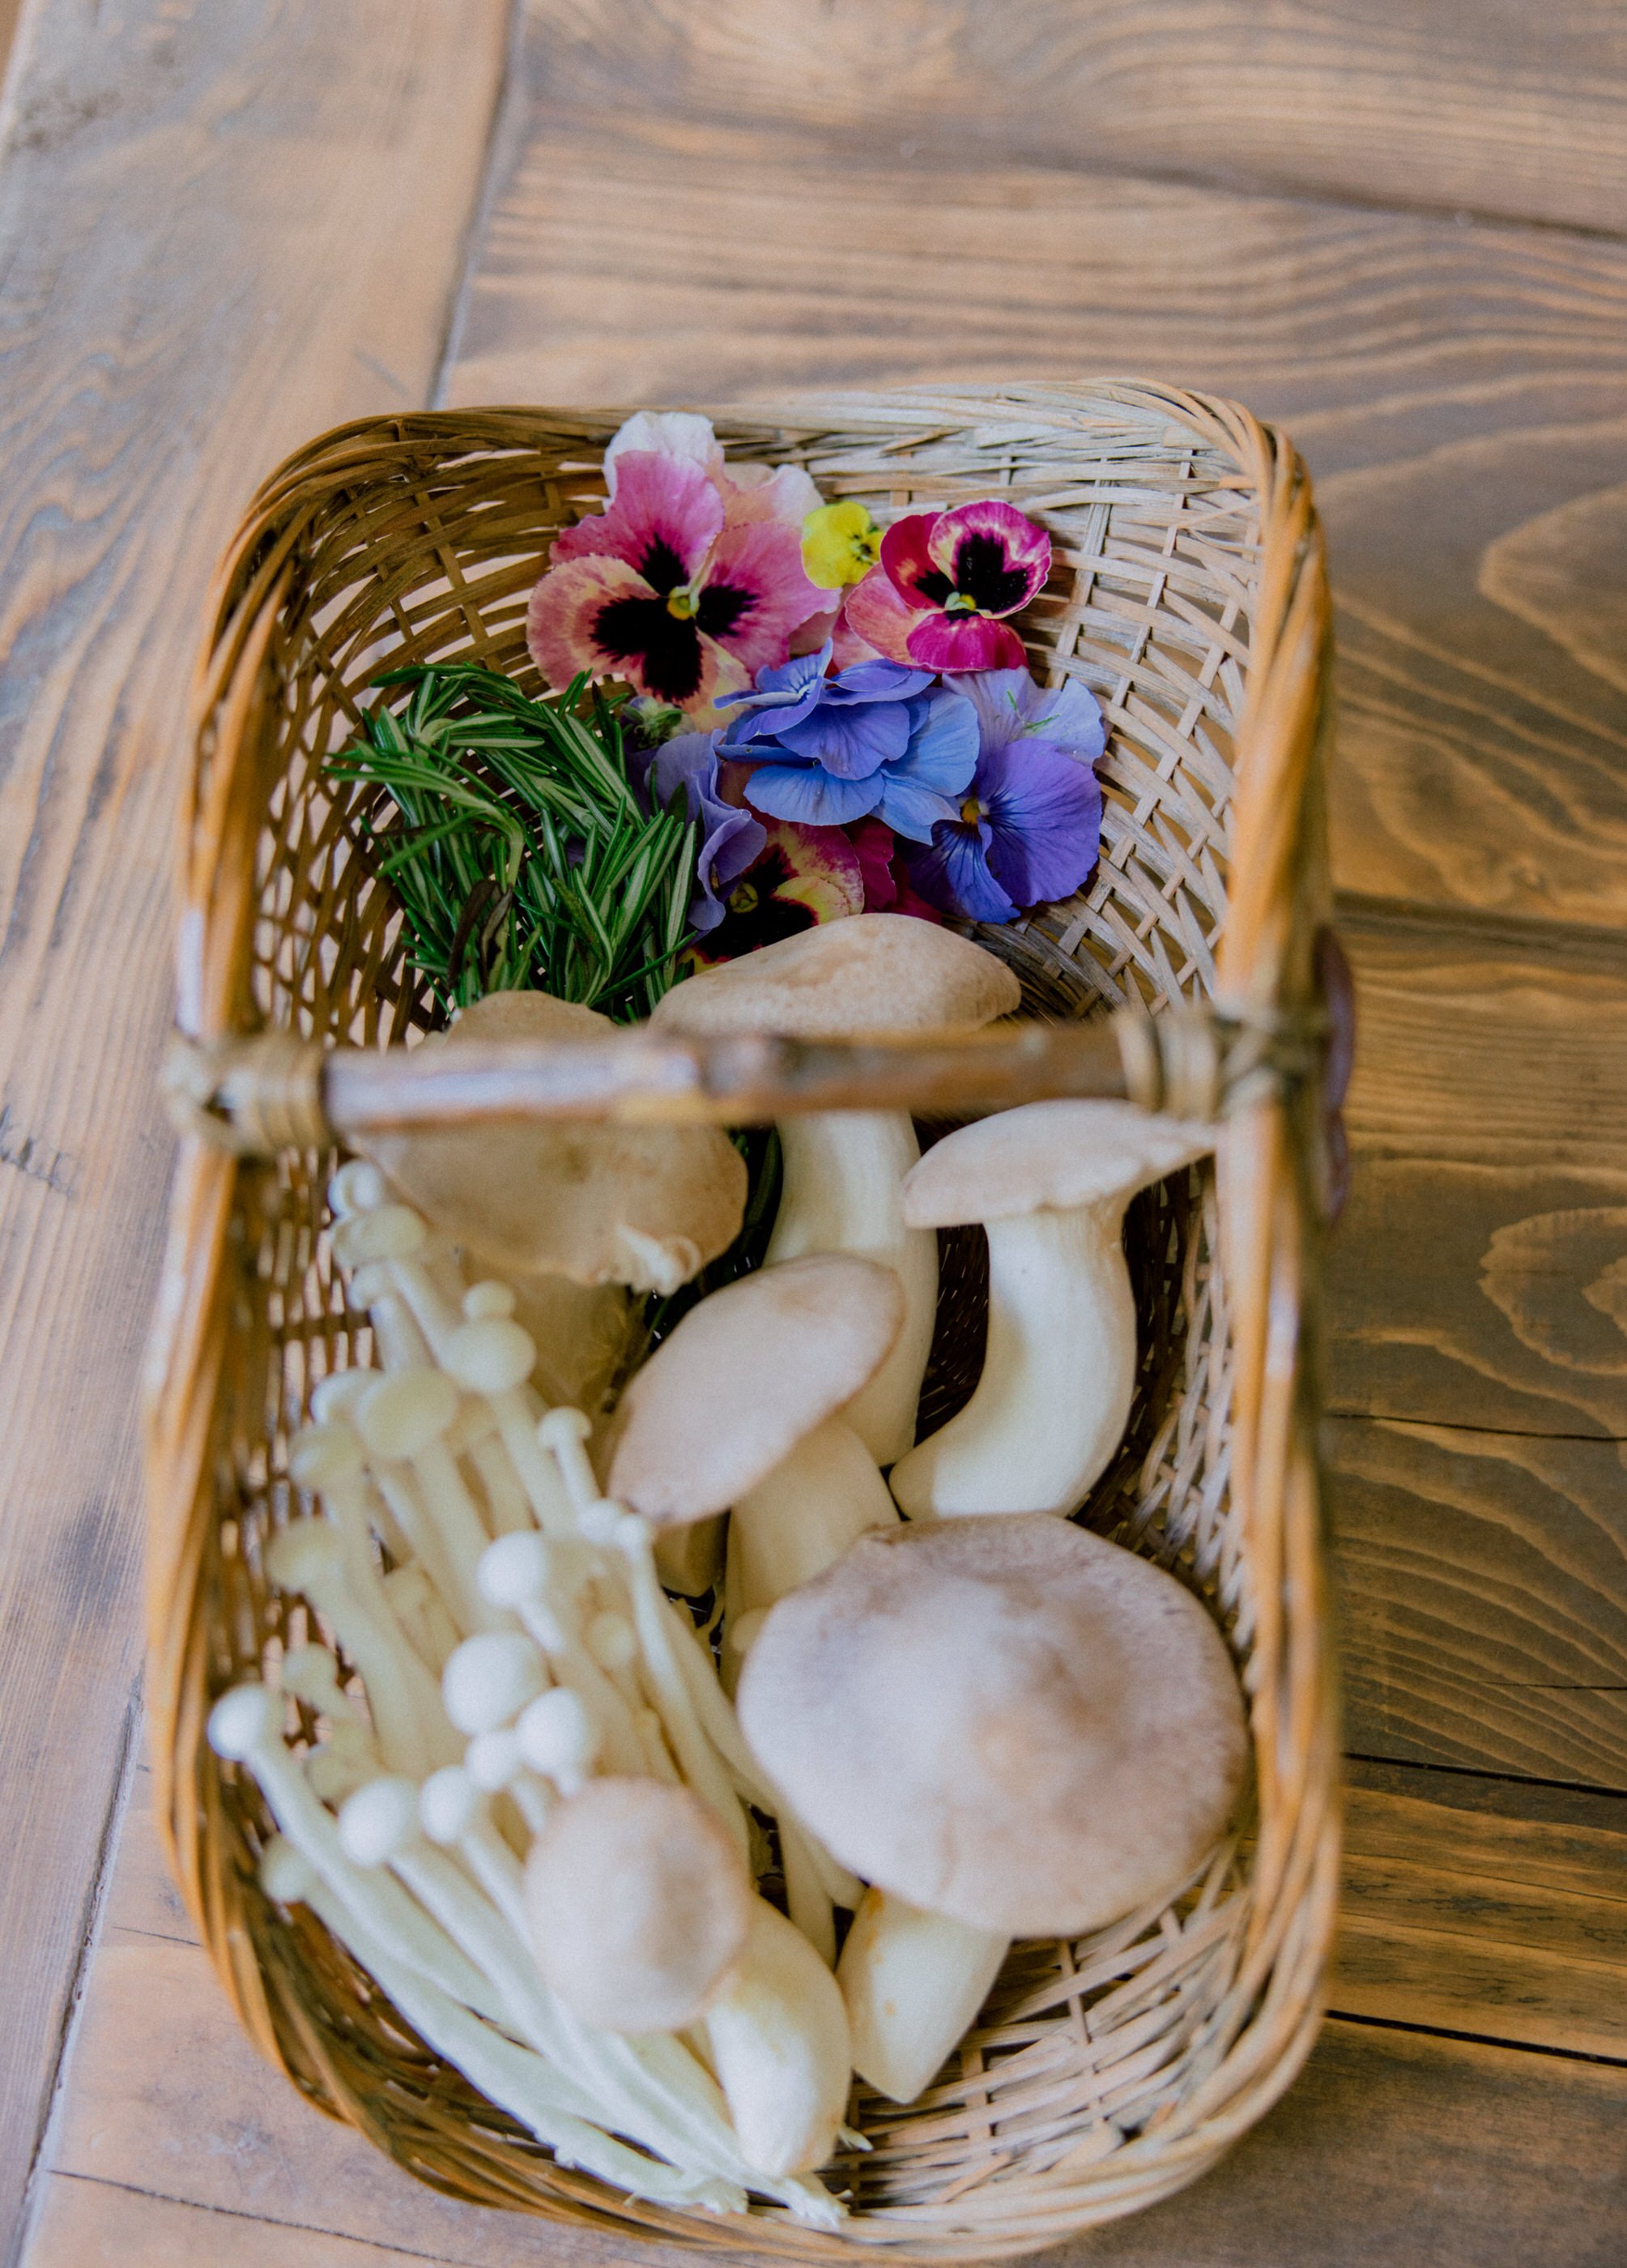 Mushroom Focaccia with Pansy Edible Flower - Her86m2 - 3.jpg